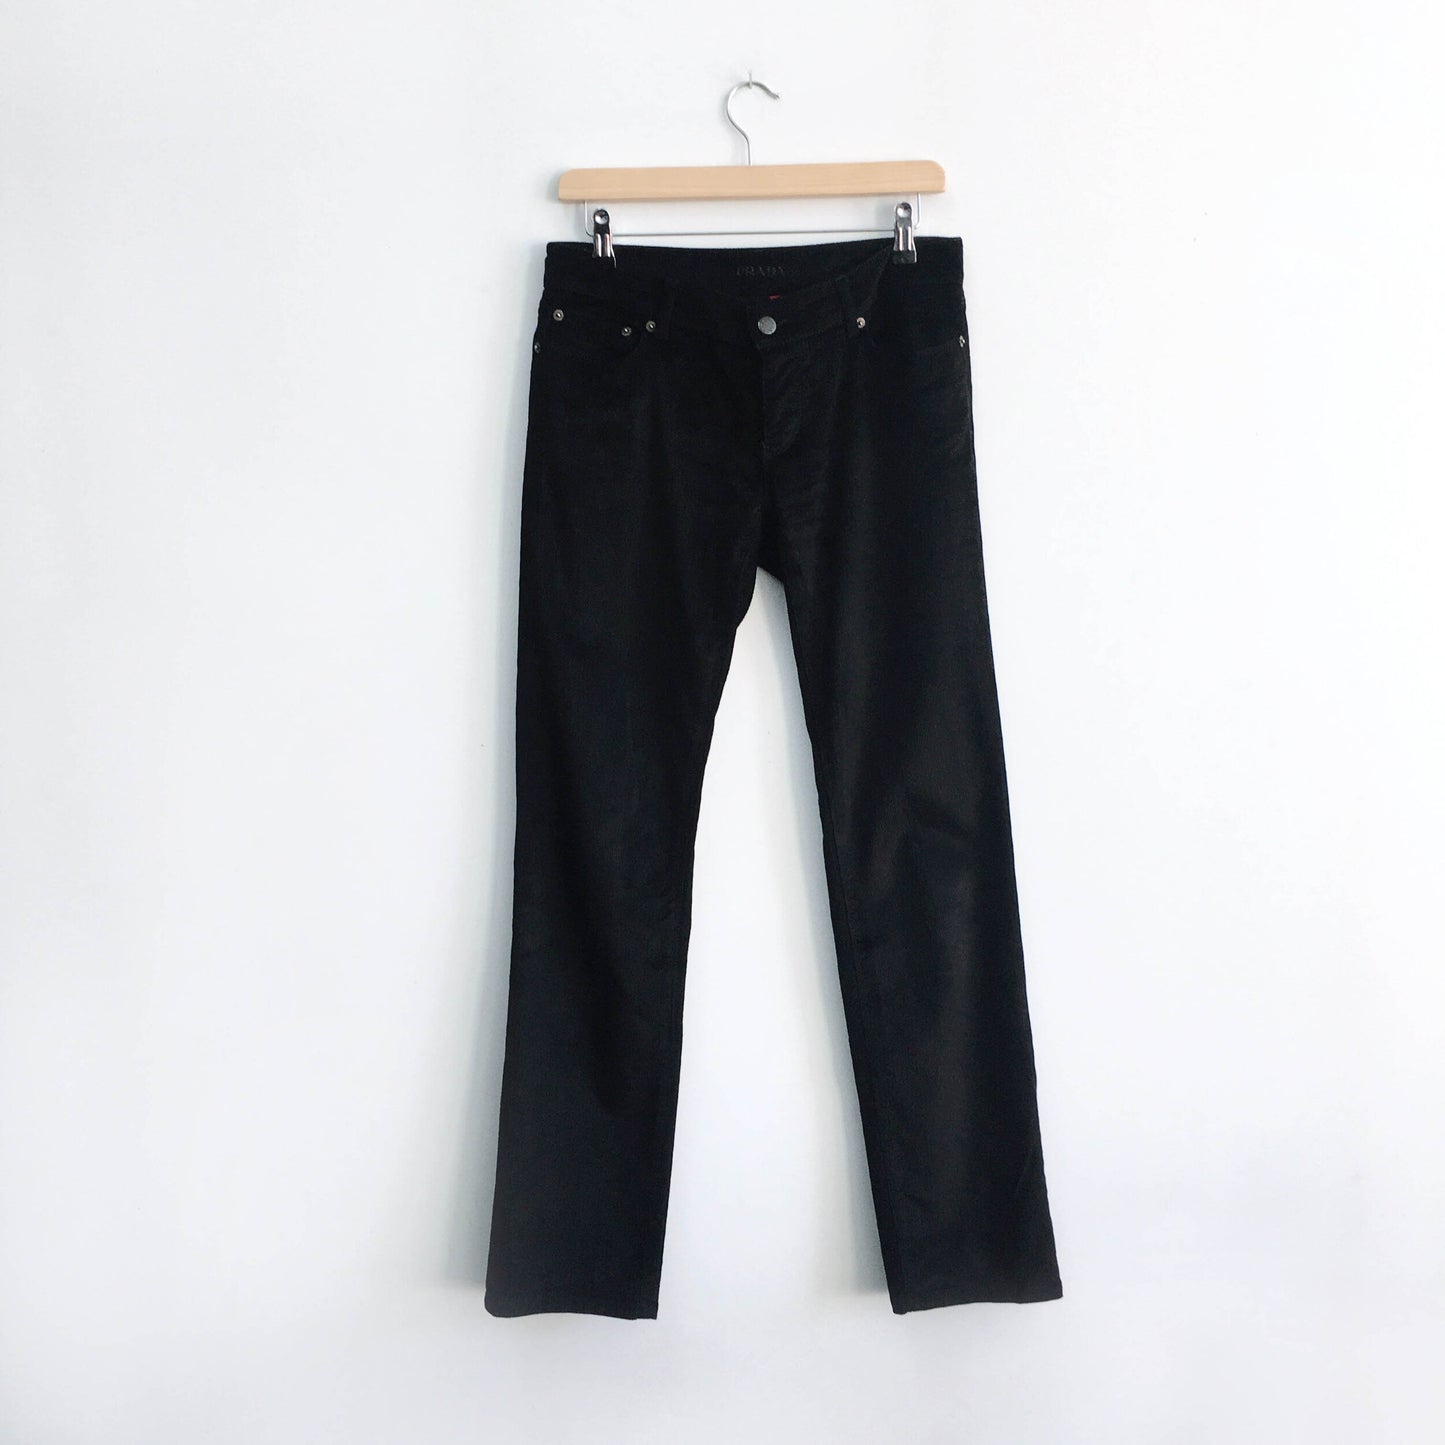 Prada Slim Corduroy Pants - size 29